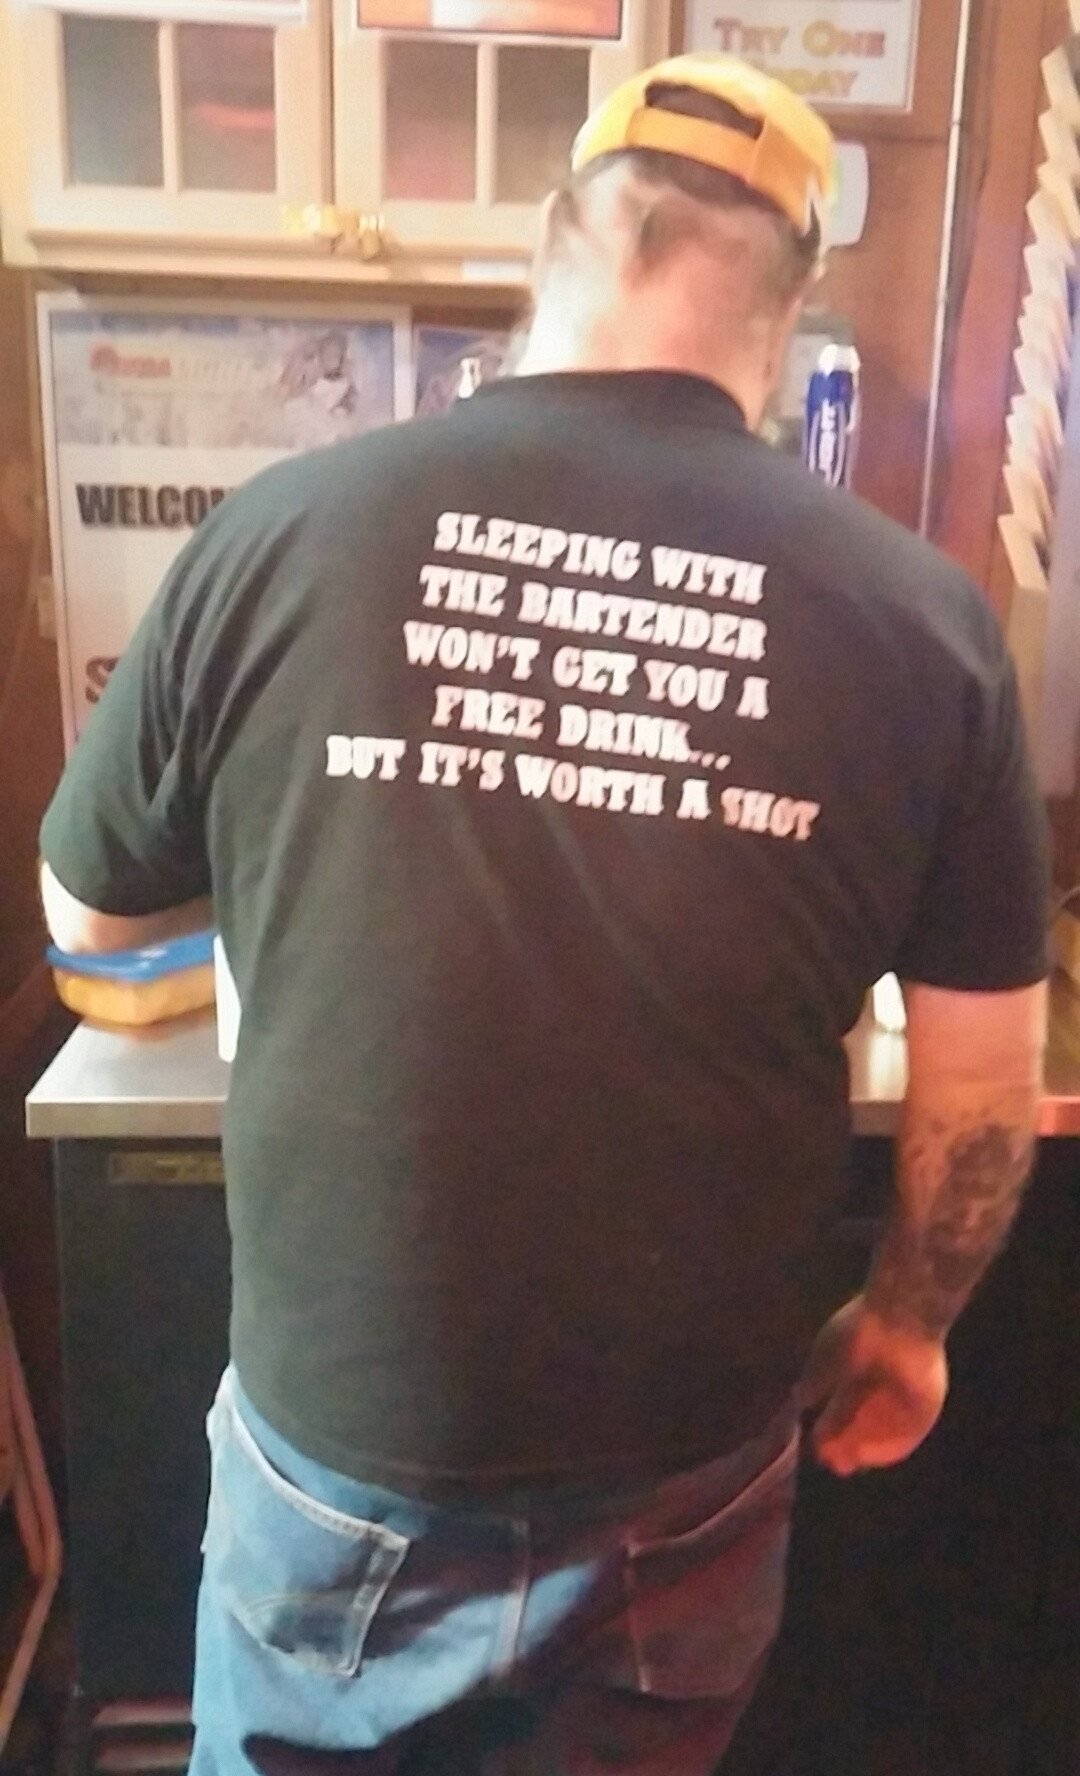 Classy bartender t-shirt is classy.